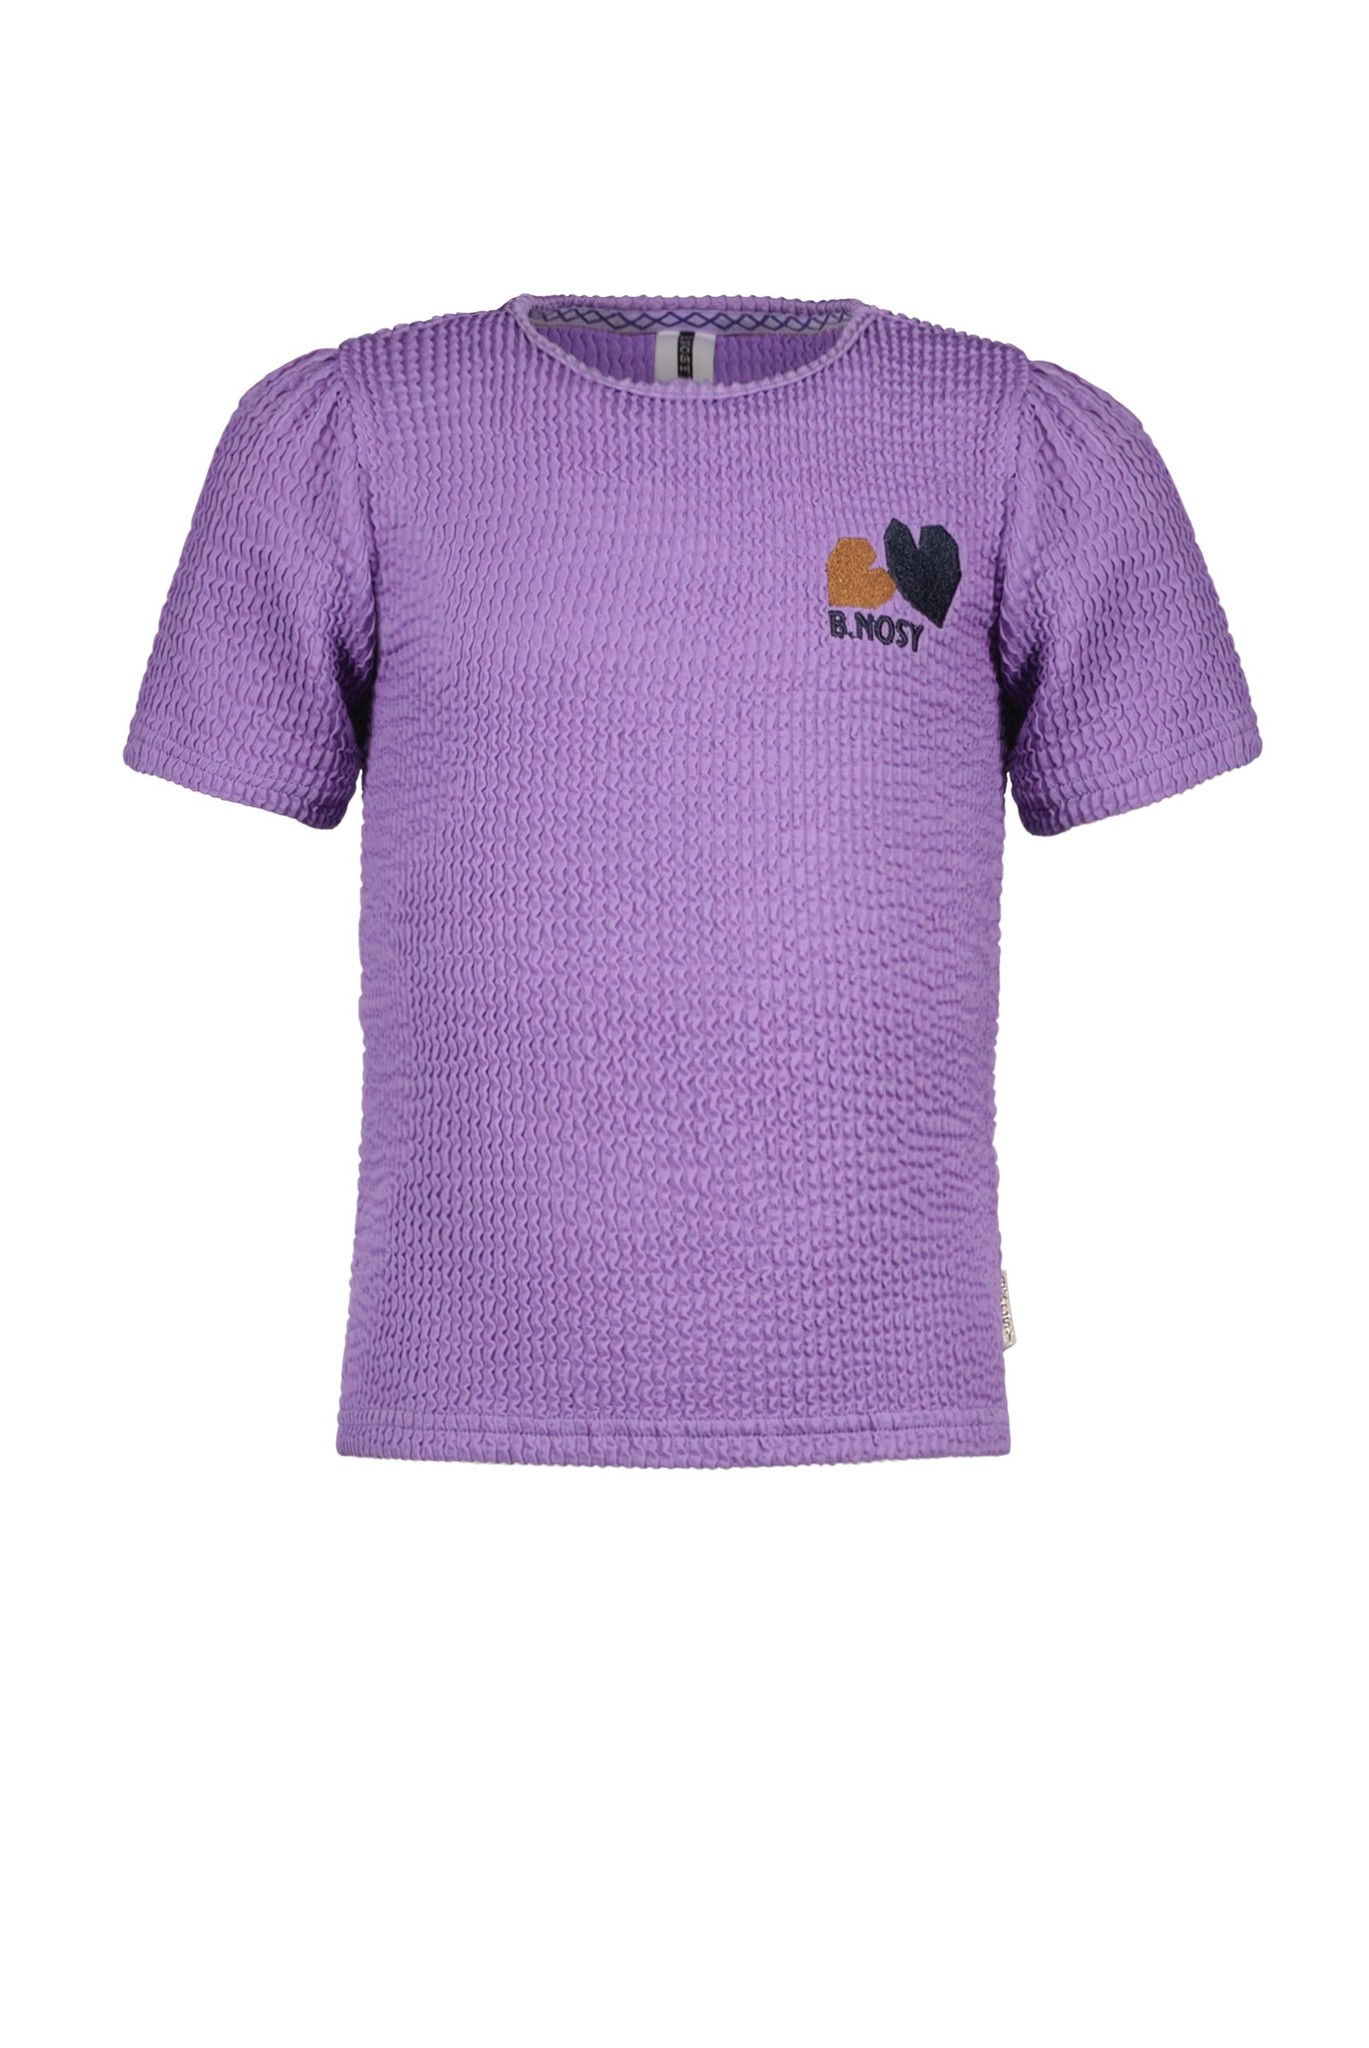 B.Nosy Meisjes t-shirt - Lilac